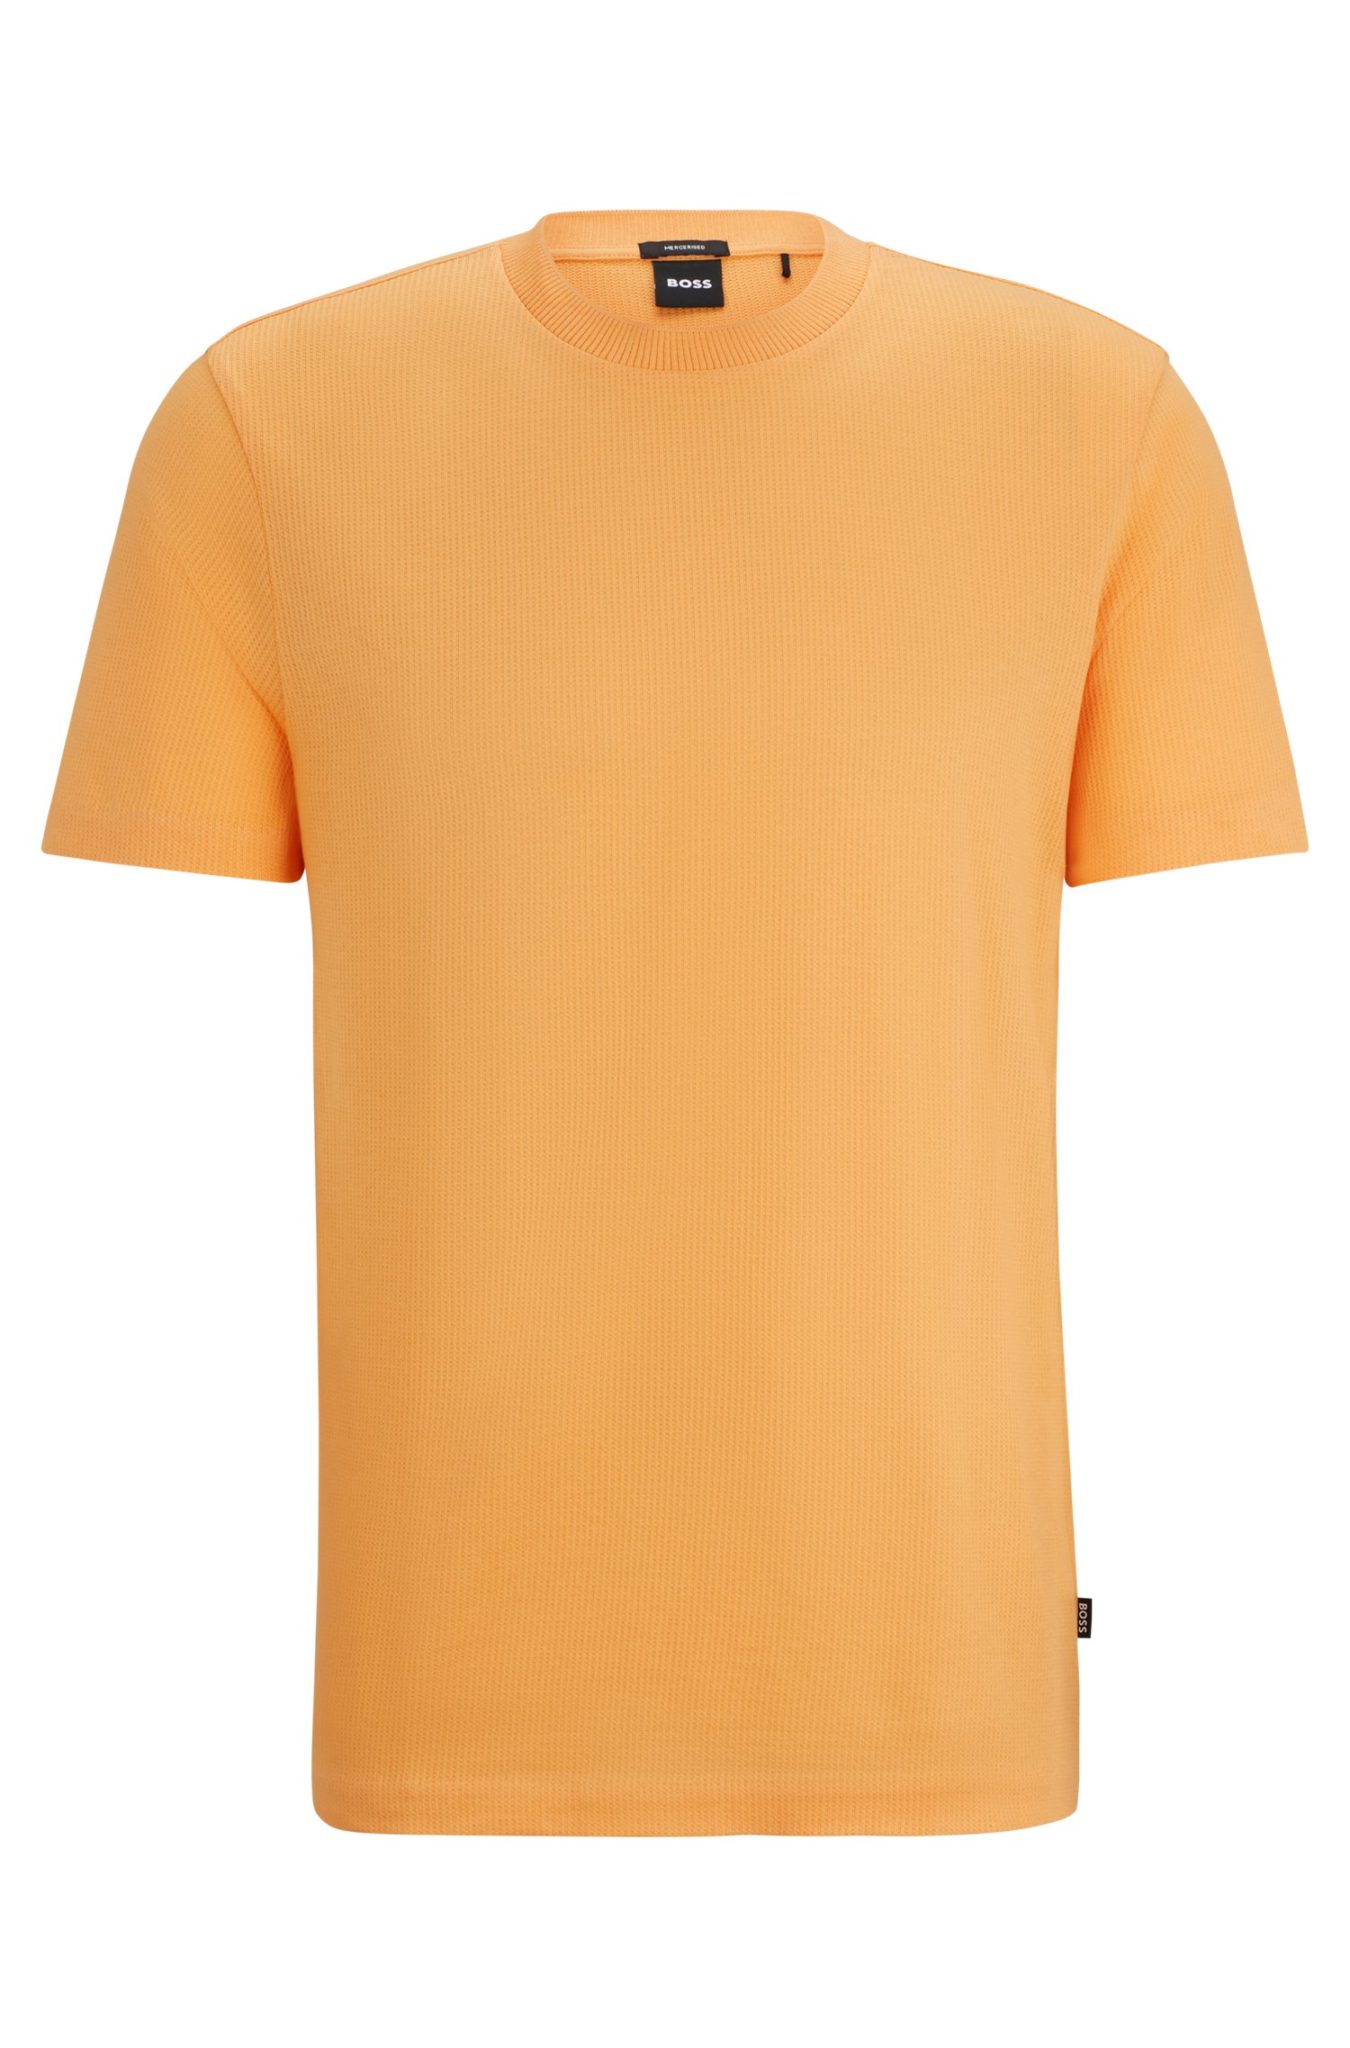 Hugo Boss T-shirt Regular Fit en coton mercerisé structuré